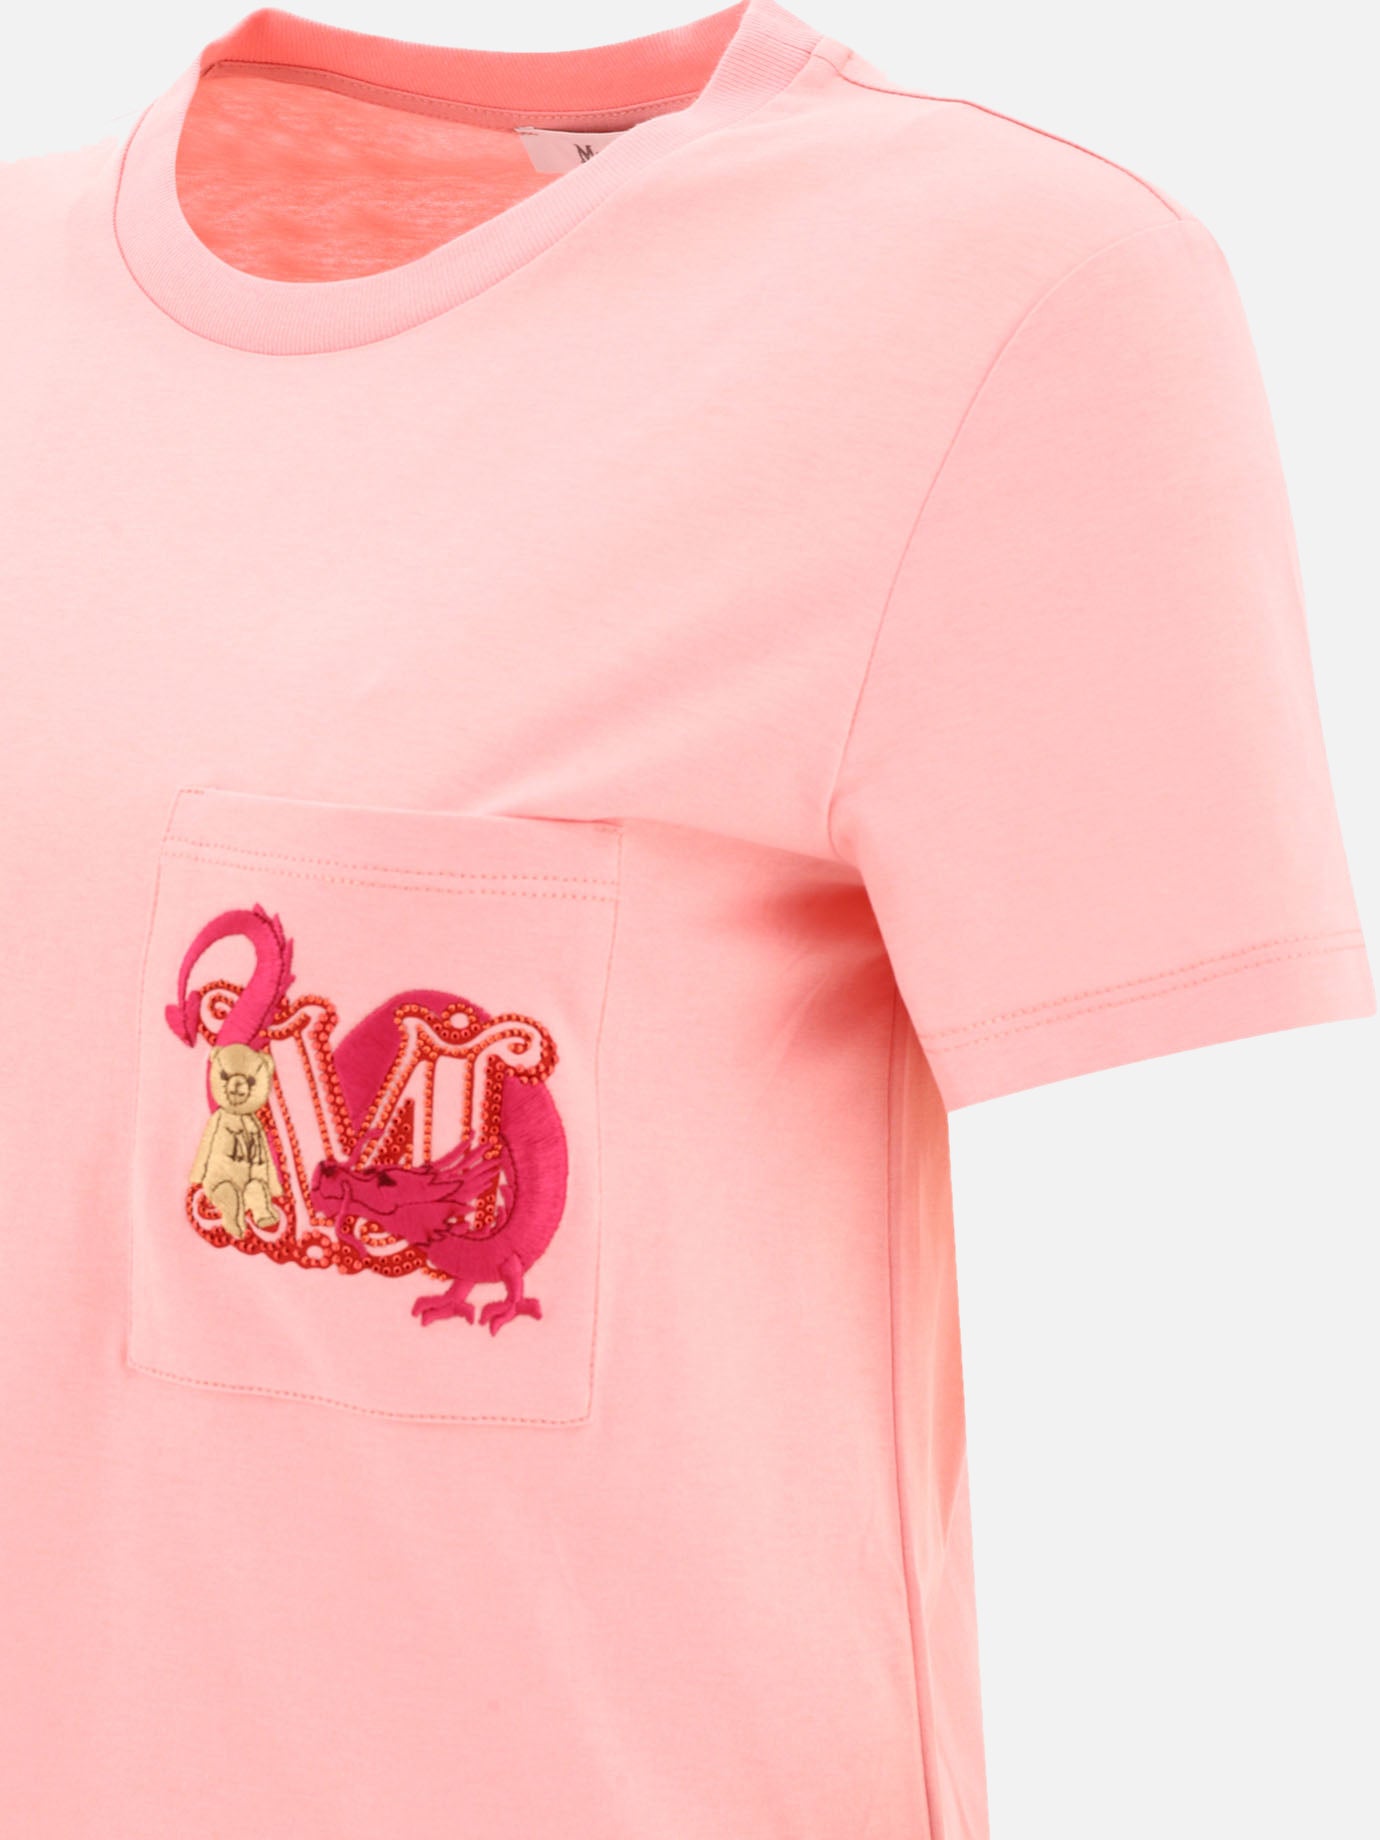 "Elmo" t-shirt